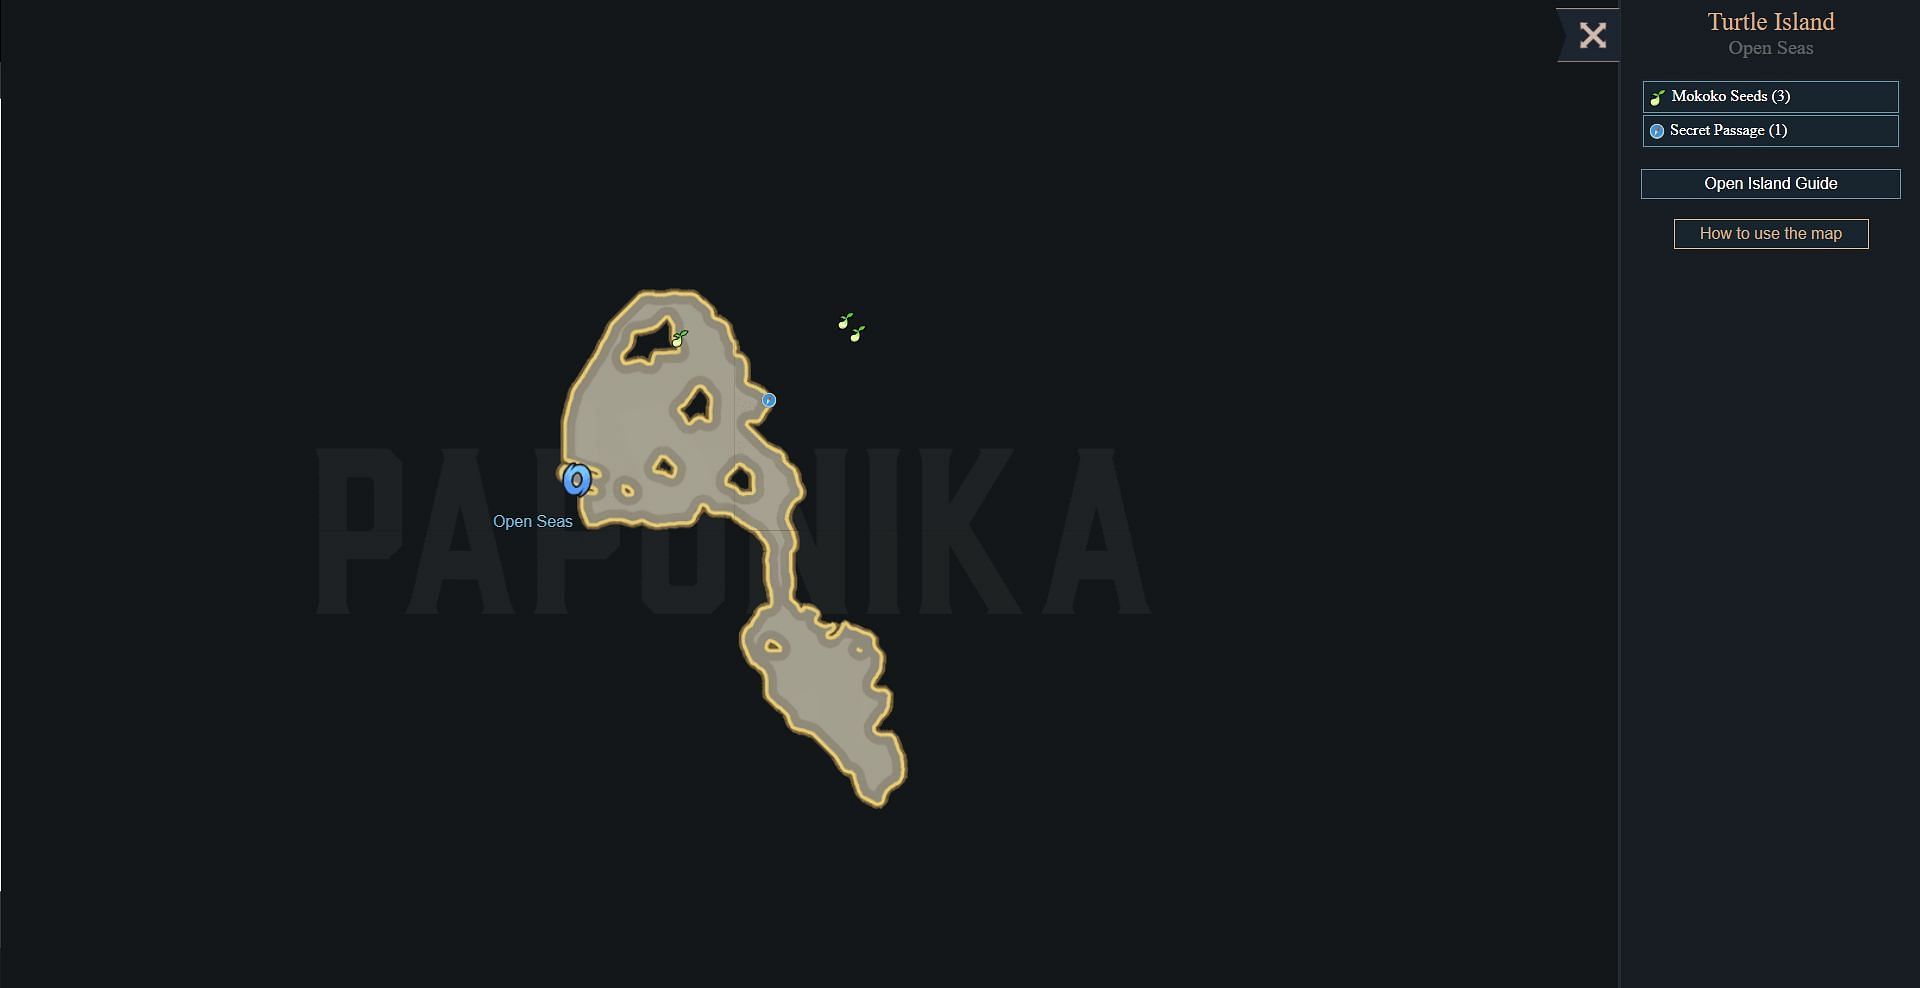 A map shows the Mokoko Seed locations on Turtle Island (Image via Papunika)